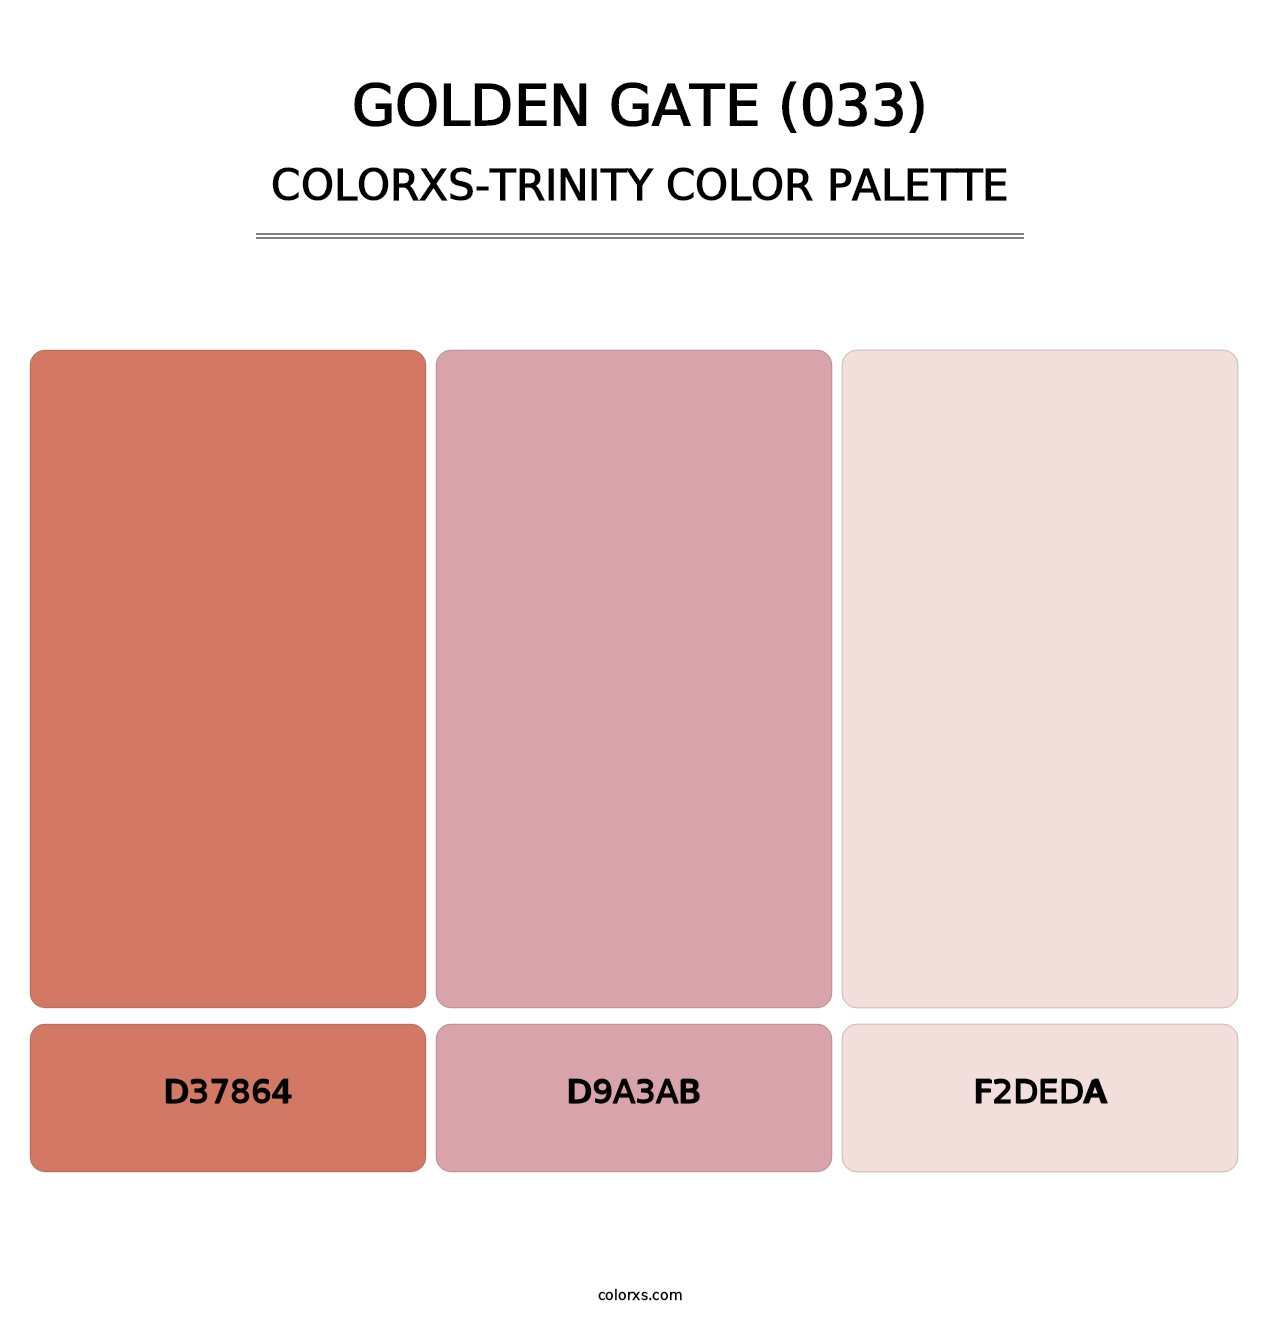 Golden Gate (033) - Colorxs Trinity Palette